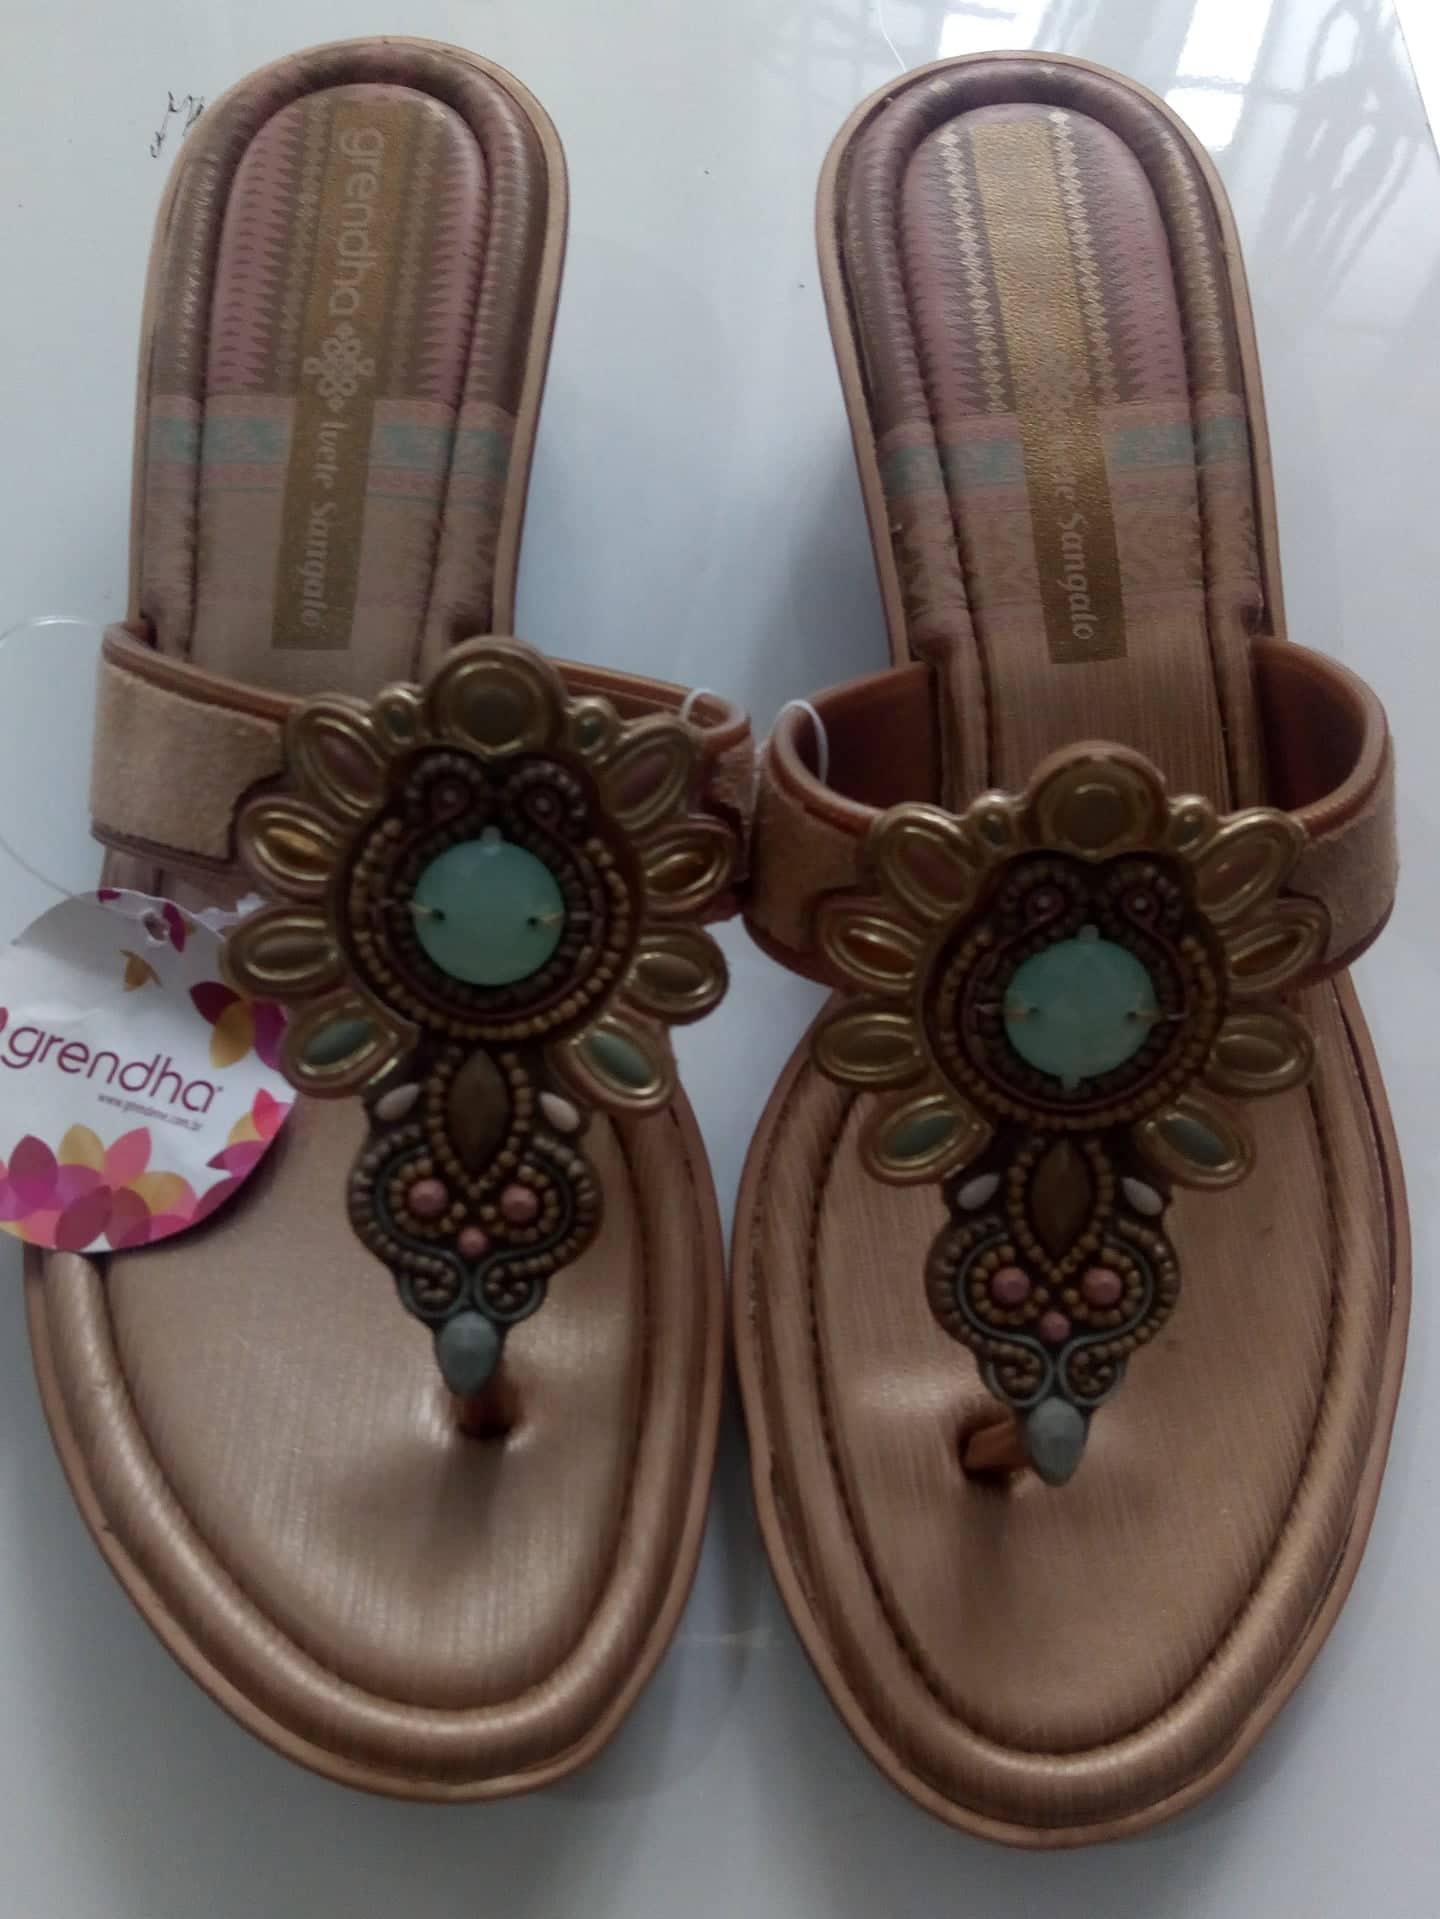 Buy Grendha Women Shoes Online | lazada 